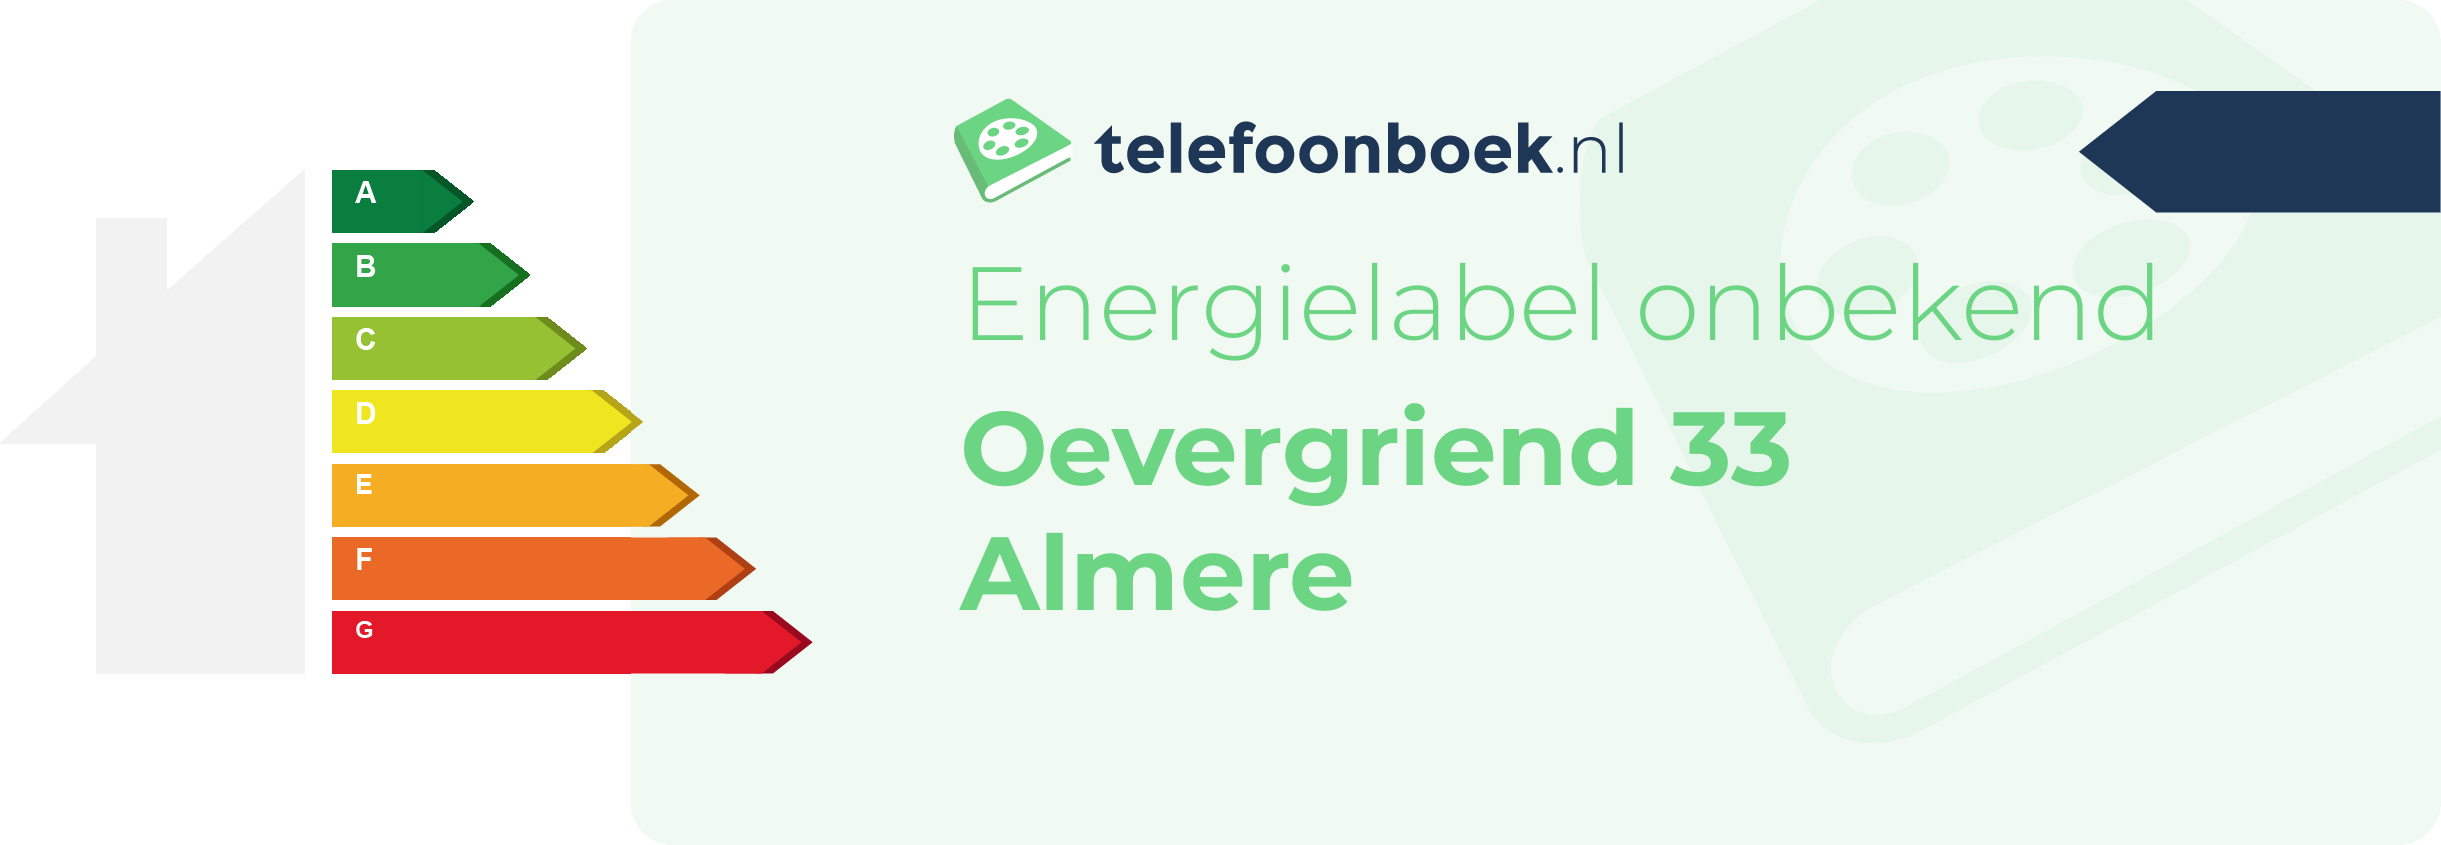 Energielabel Oevergriend 33 Almere